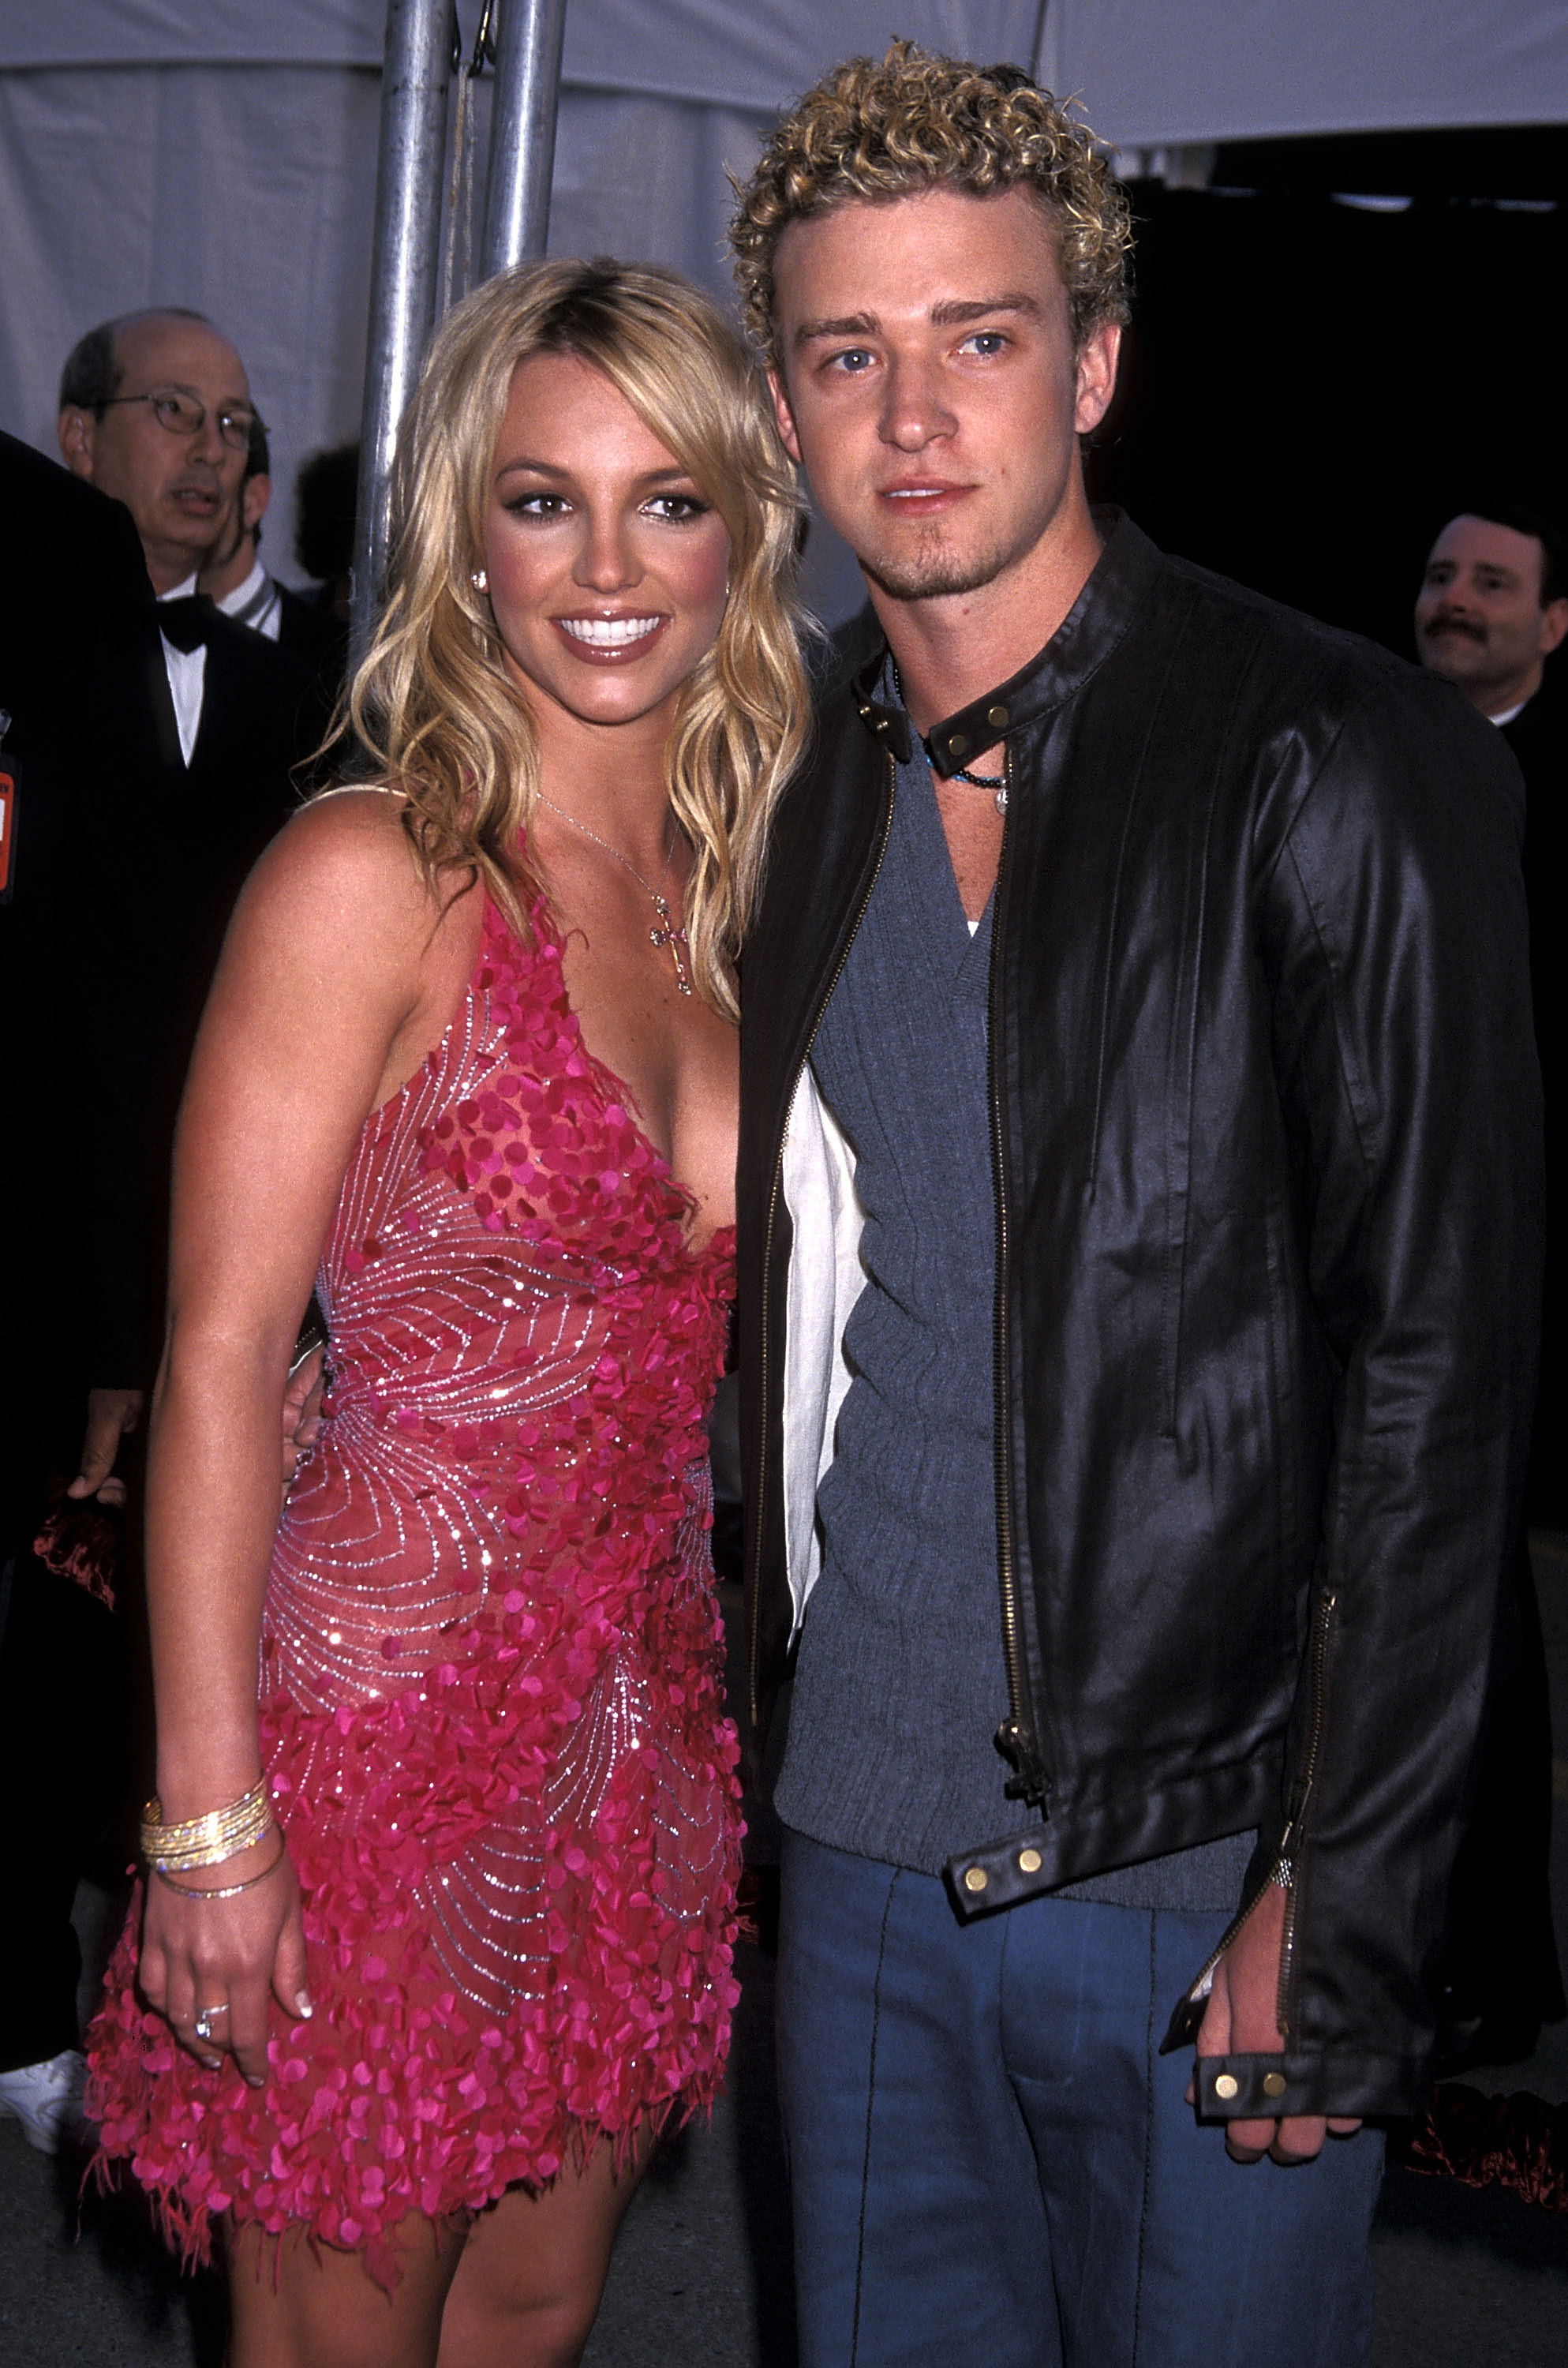 Britney Spears und Justin Timberlake bei den 29th Annual American Music Awards in Los Angeles, Kalifornien am 9. Januar 2002 | Quelle: Getty Images